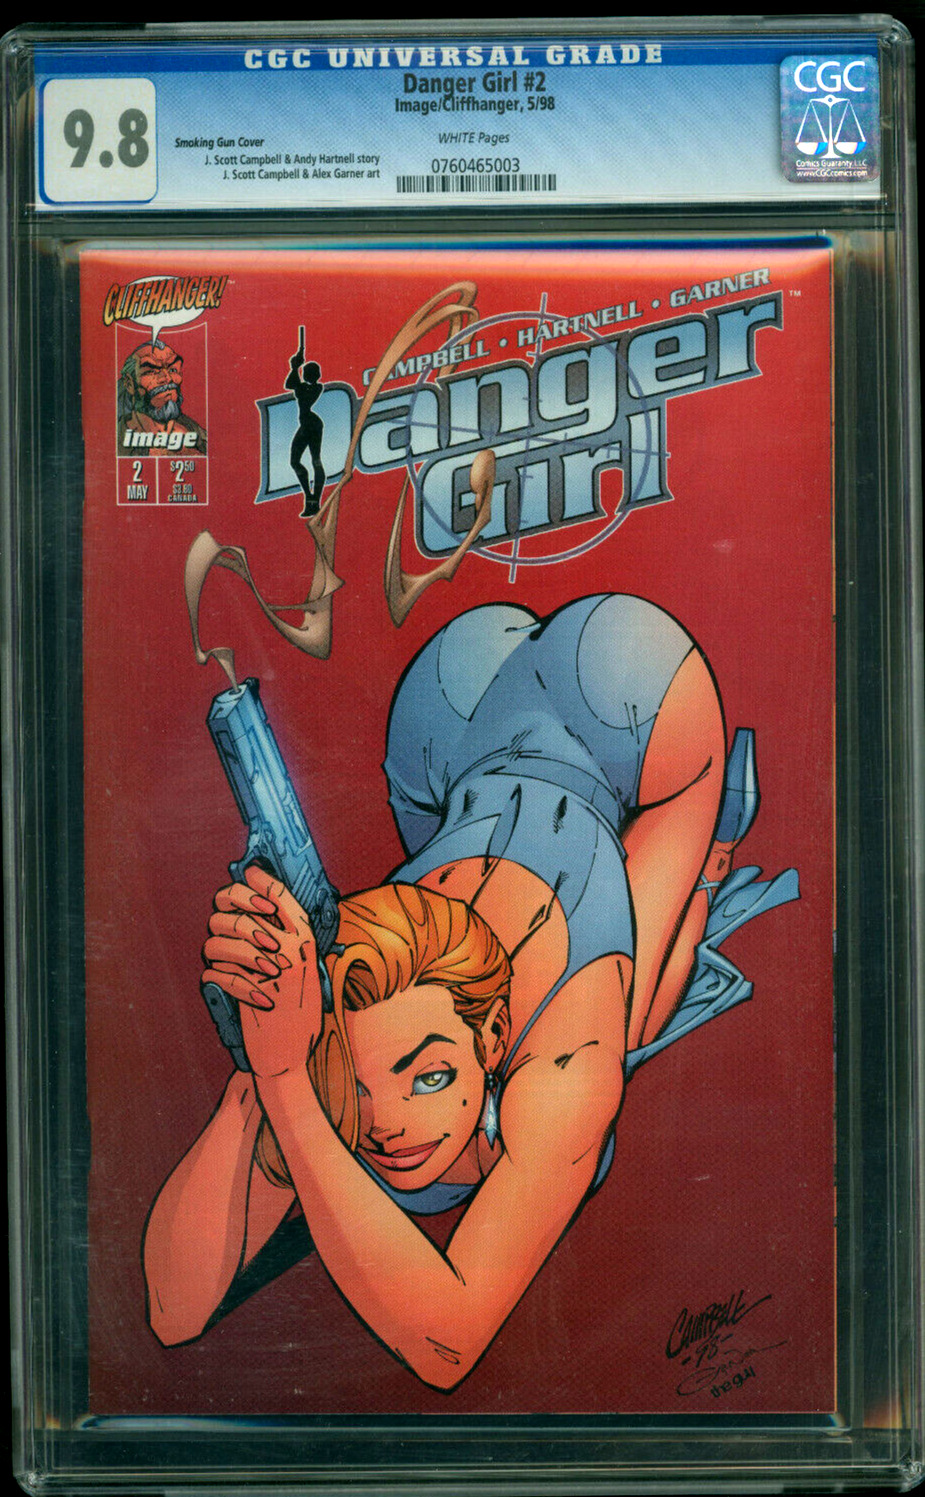 Danger Girl 2 Smoking Gun Variant CGC 9.8 J Scott Campbell Image Comics 1998 GGA